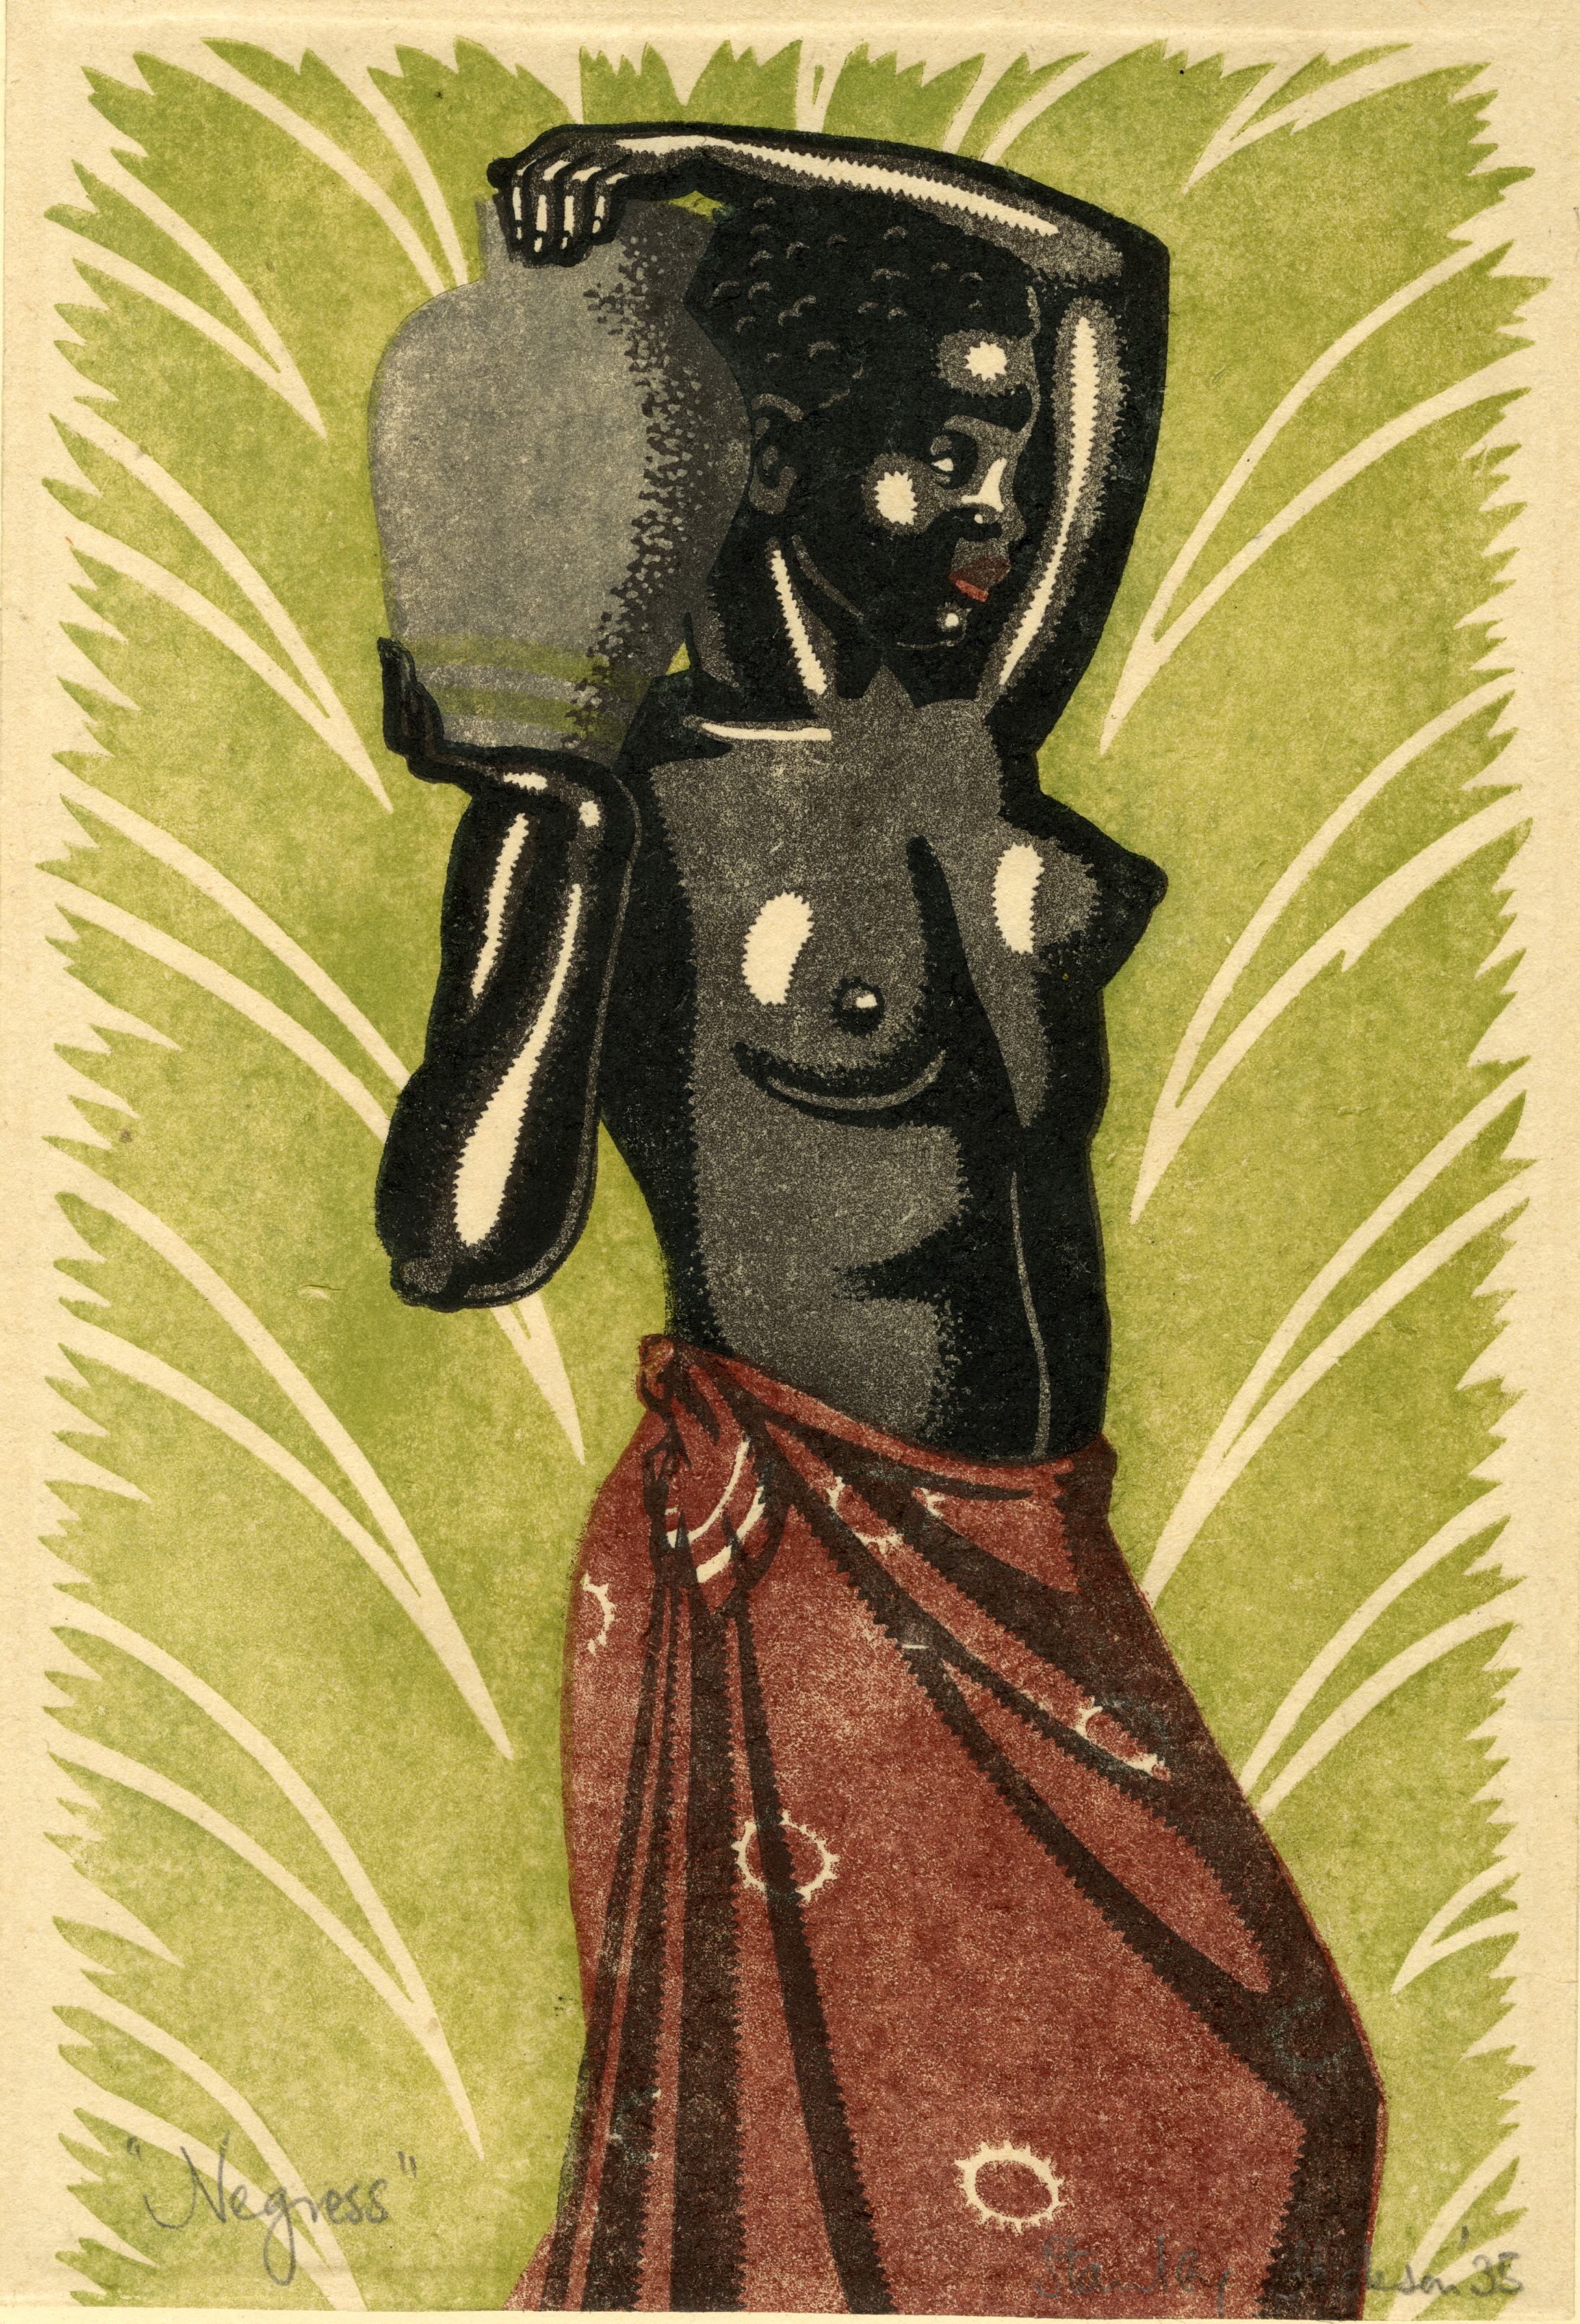 Black woman carrying a jar (1935)